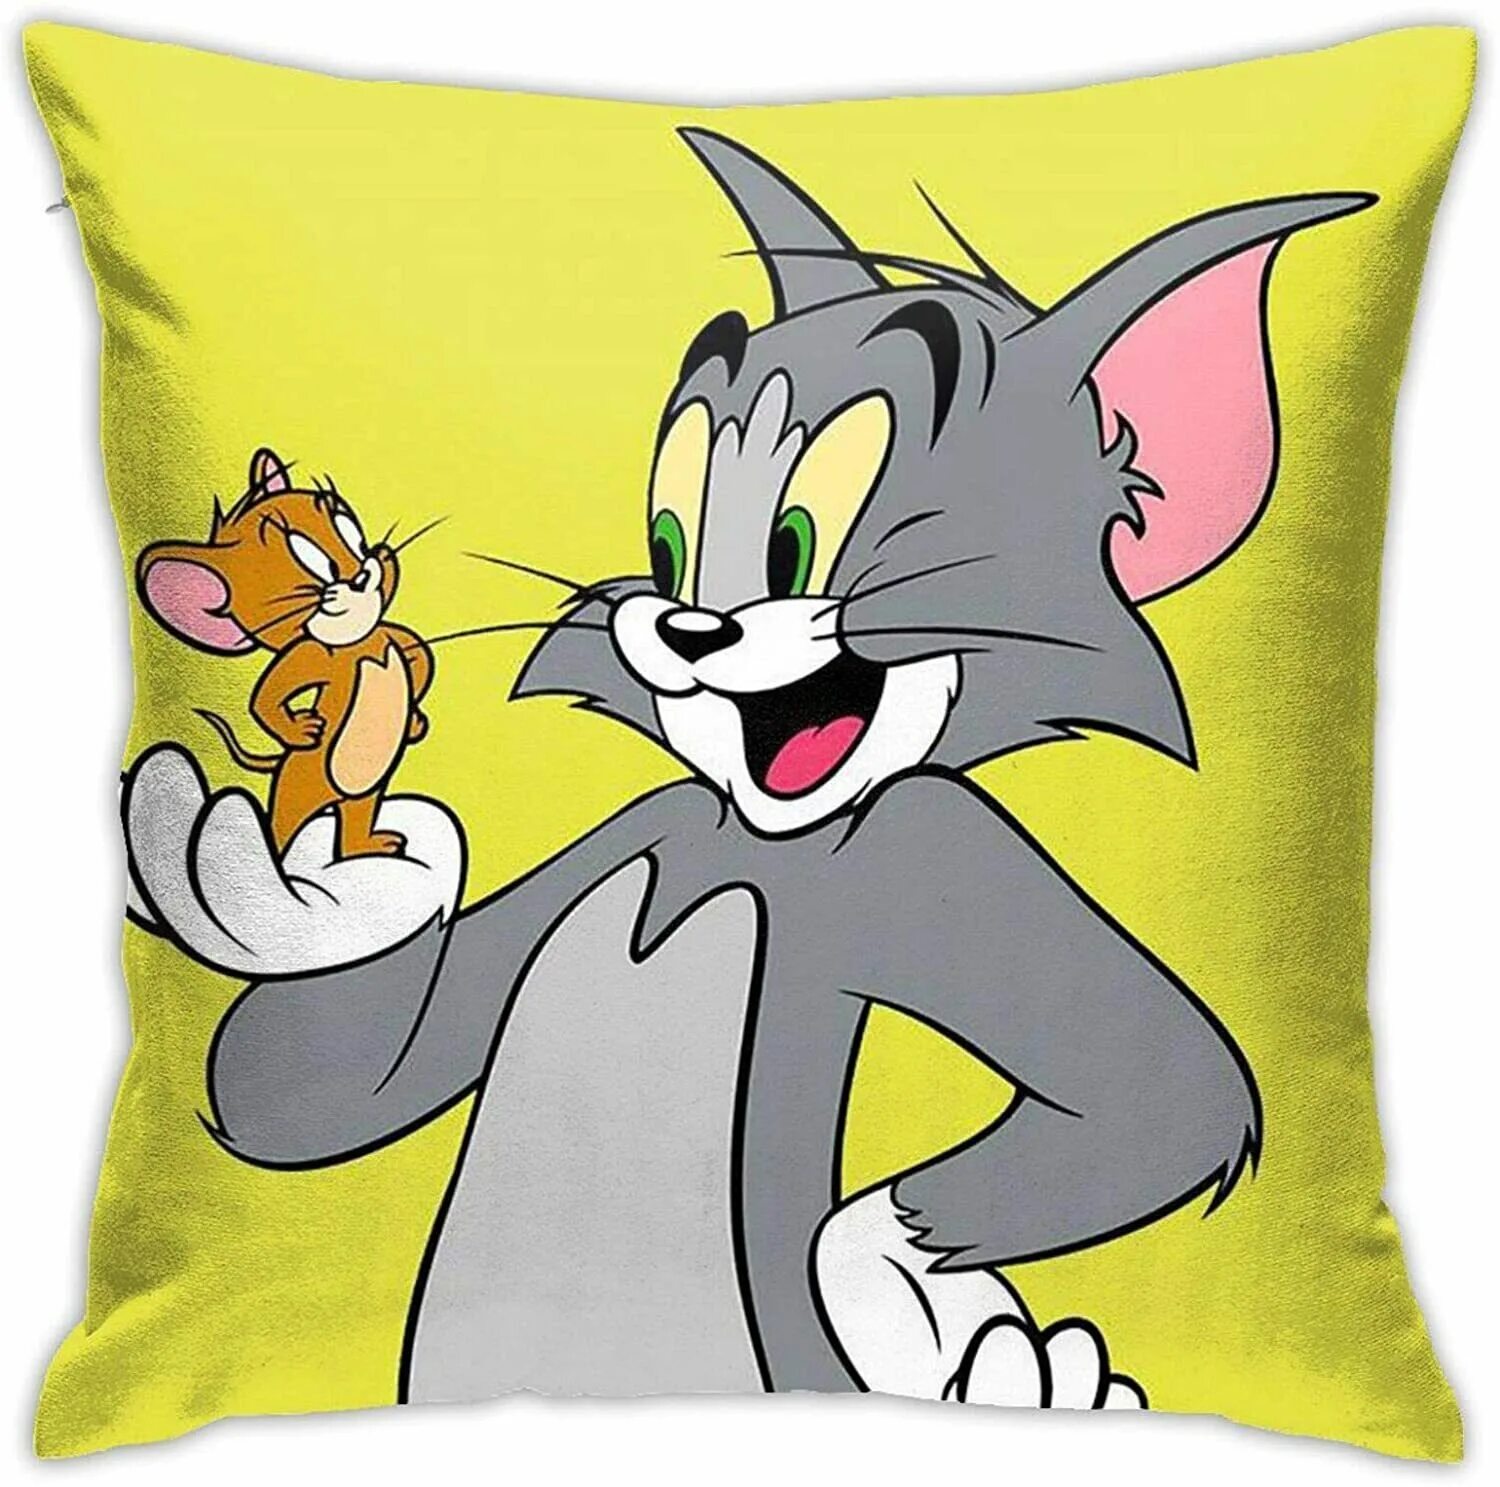 Tom and Jerry. Том и Джерри Джерри. Том из том и Джерри. Том и Джерри герои. 3 х лет на том